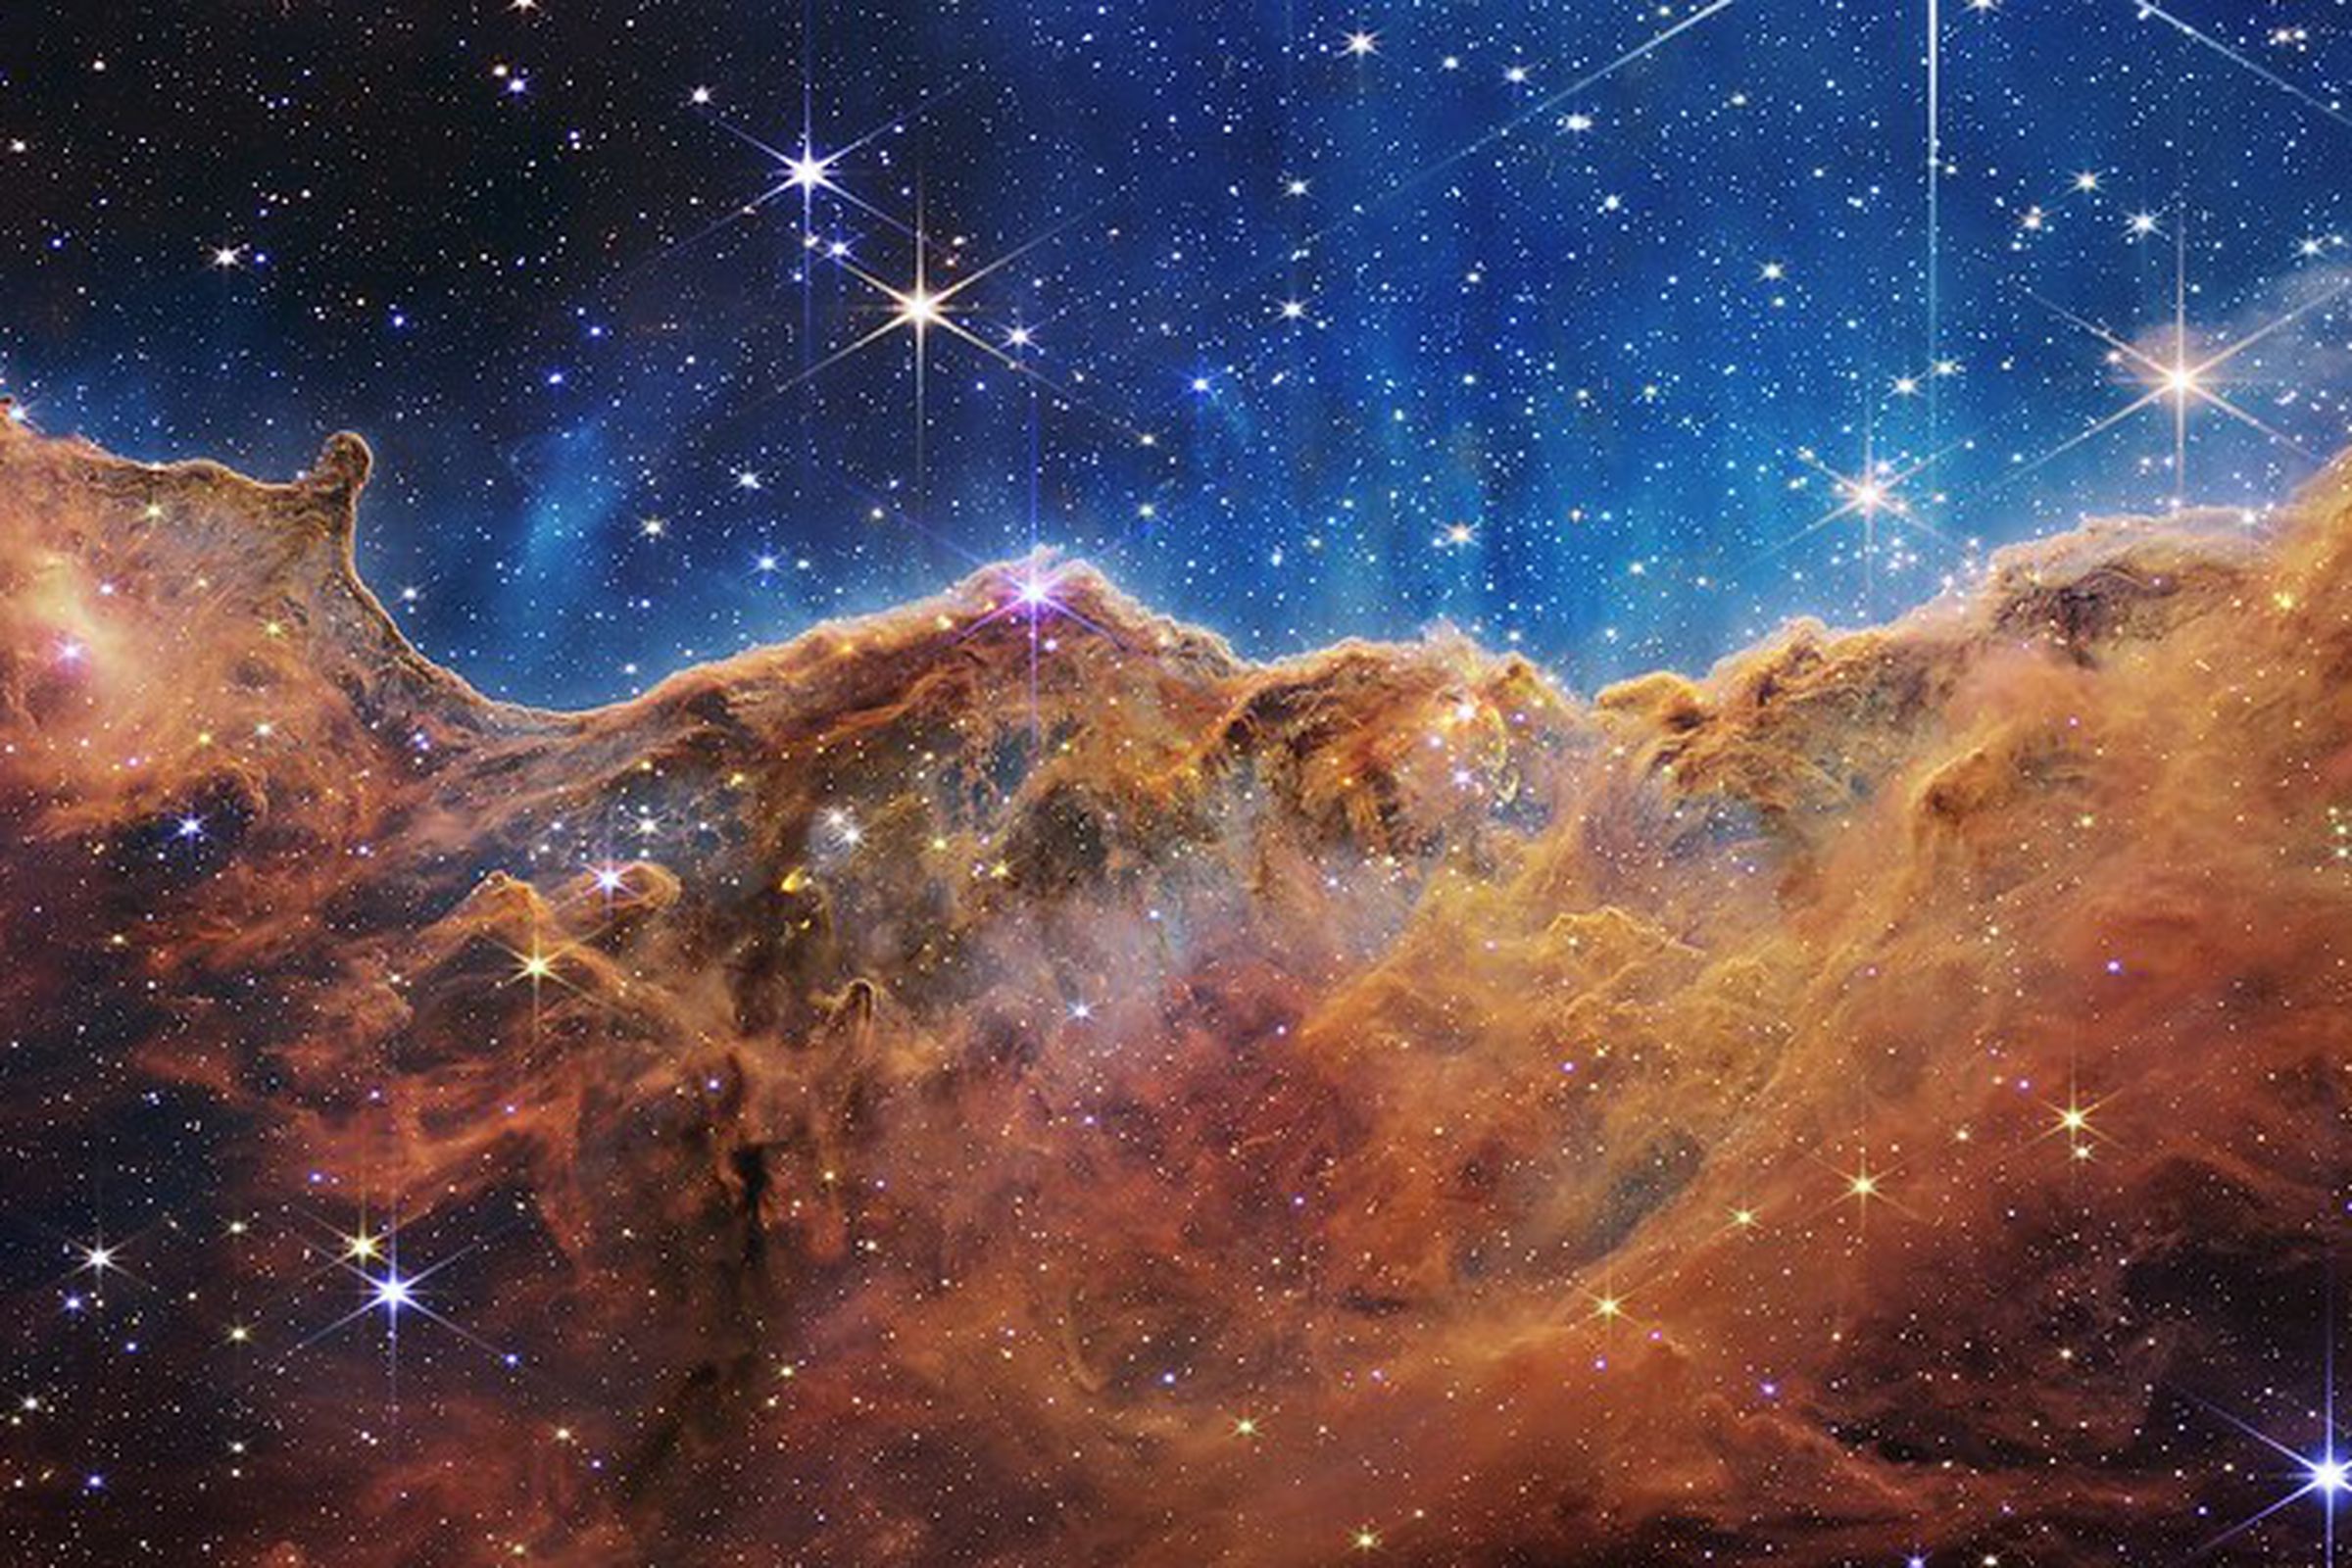 An image of the Carina Nebula, taken by JWST